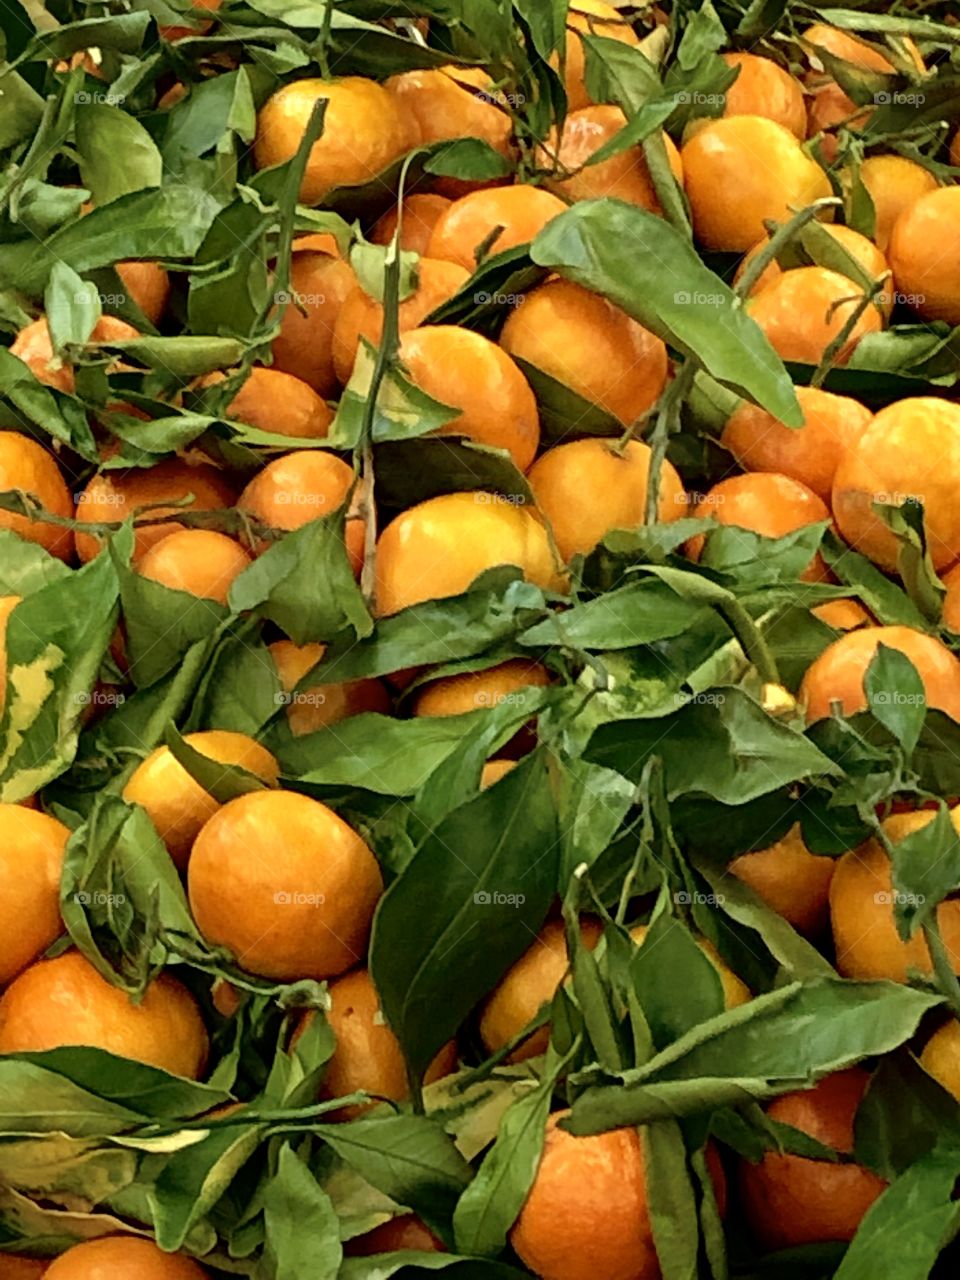 Mandarin oranges in an Asian market